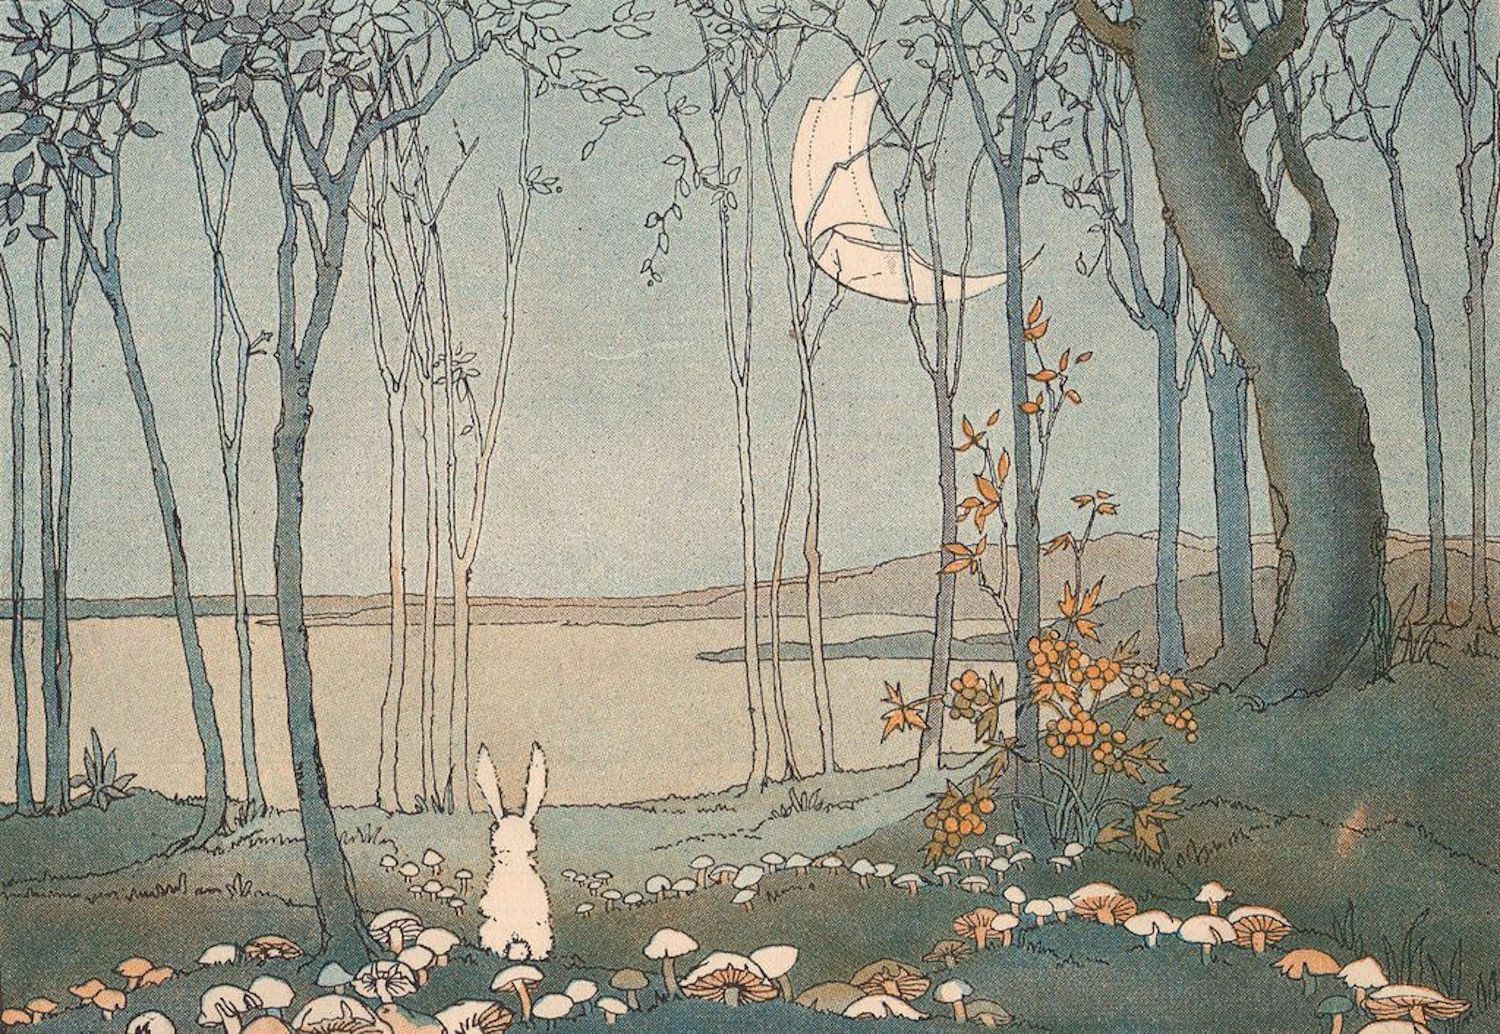   Postcard: Vintage Repro - Bunny Rabbit Looks at Crescent Moon, Lake, Mushrooms